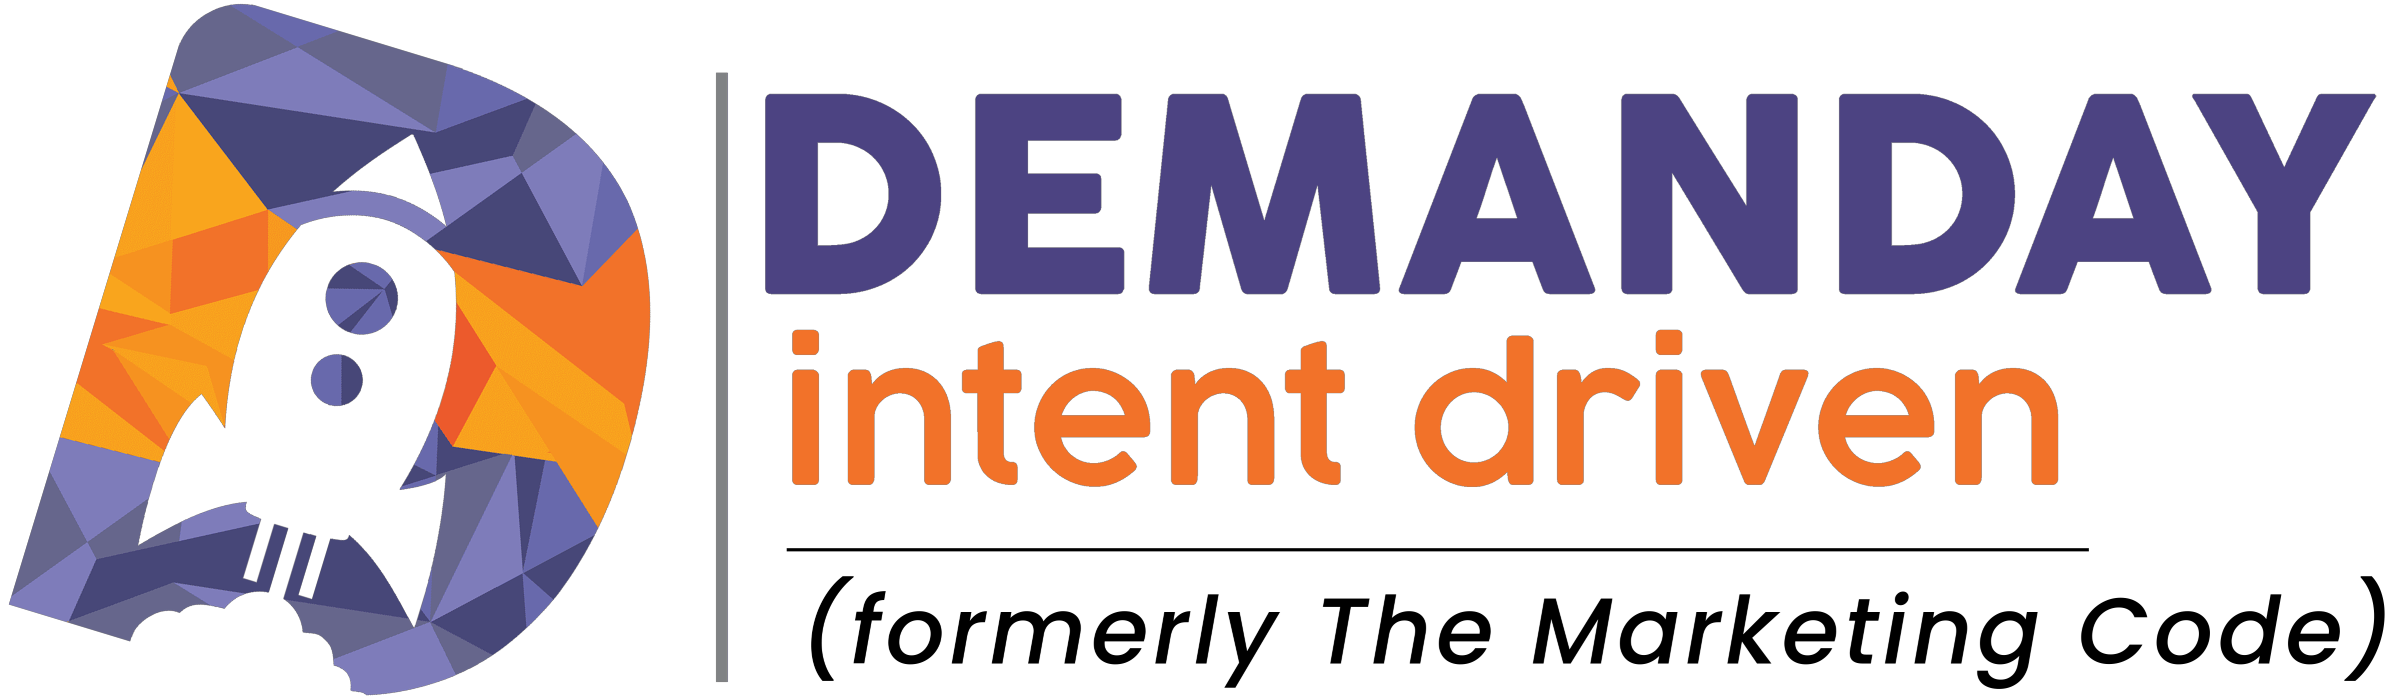 DEMANDAY intent driven | Performance & Growth Marketing |B2B DATA SOLUTIONS | CONTENT DISTRIBUTION | DEMAND GENERATION